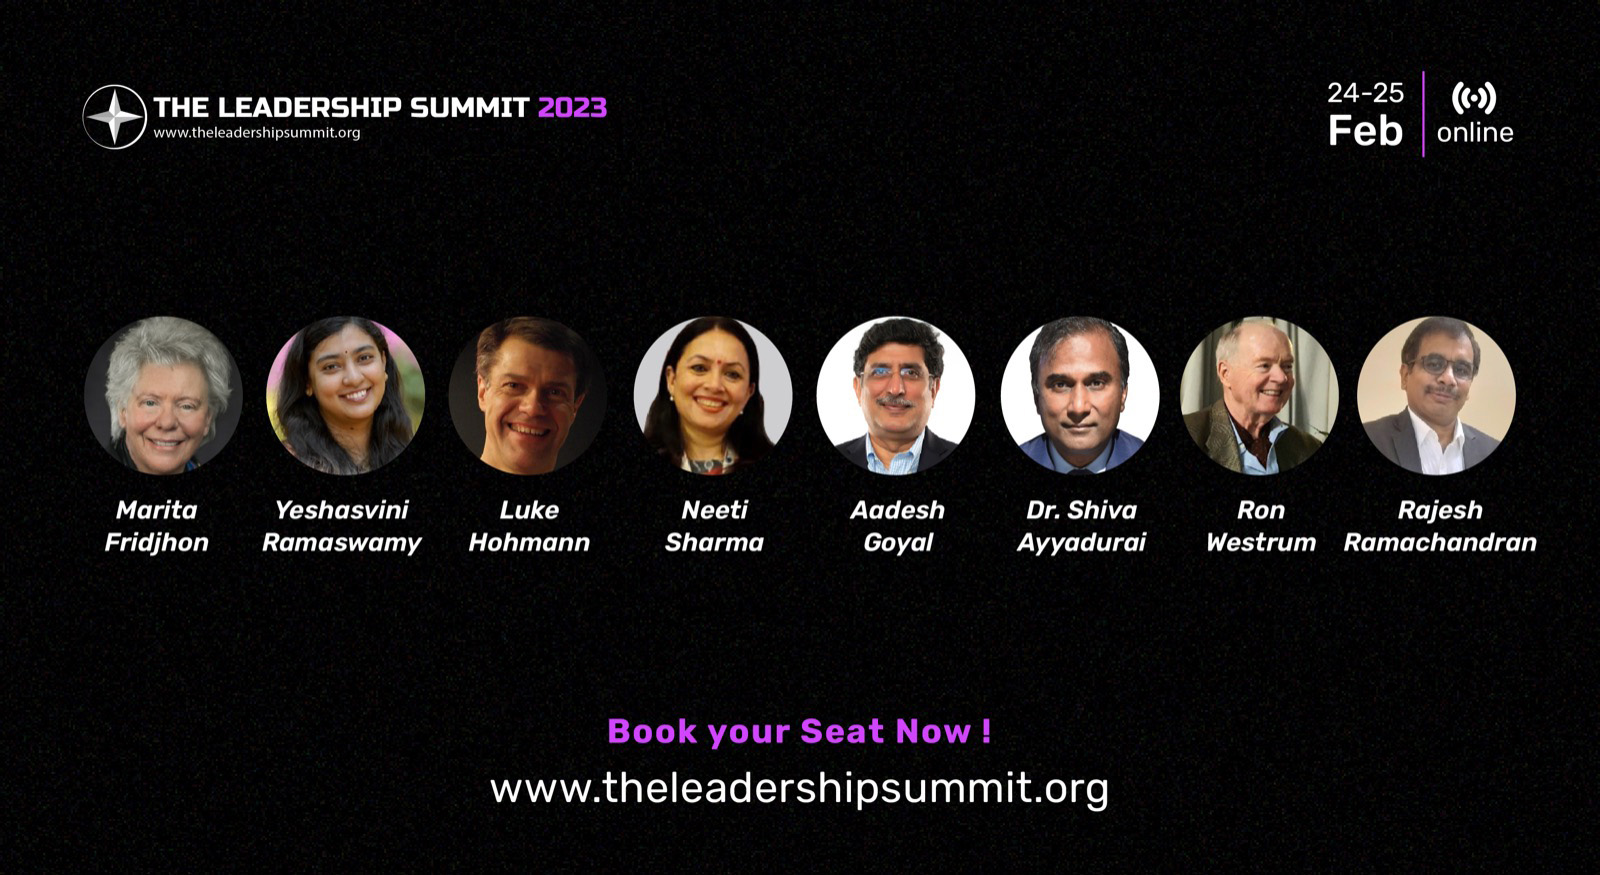 The Leadership Summit 2023 Global Online Leadership Event